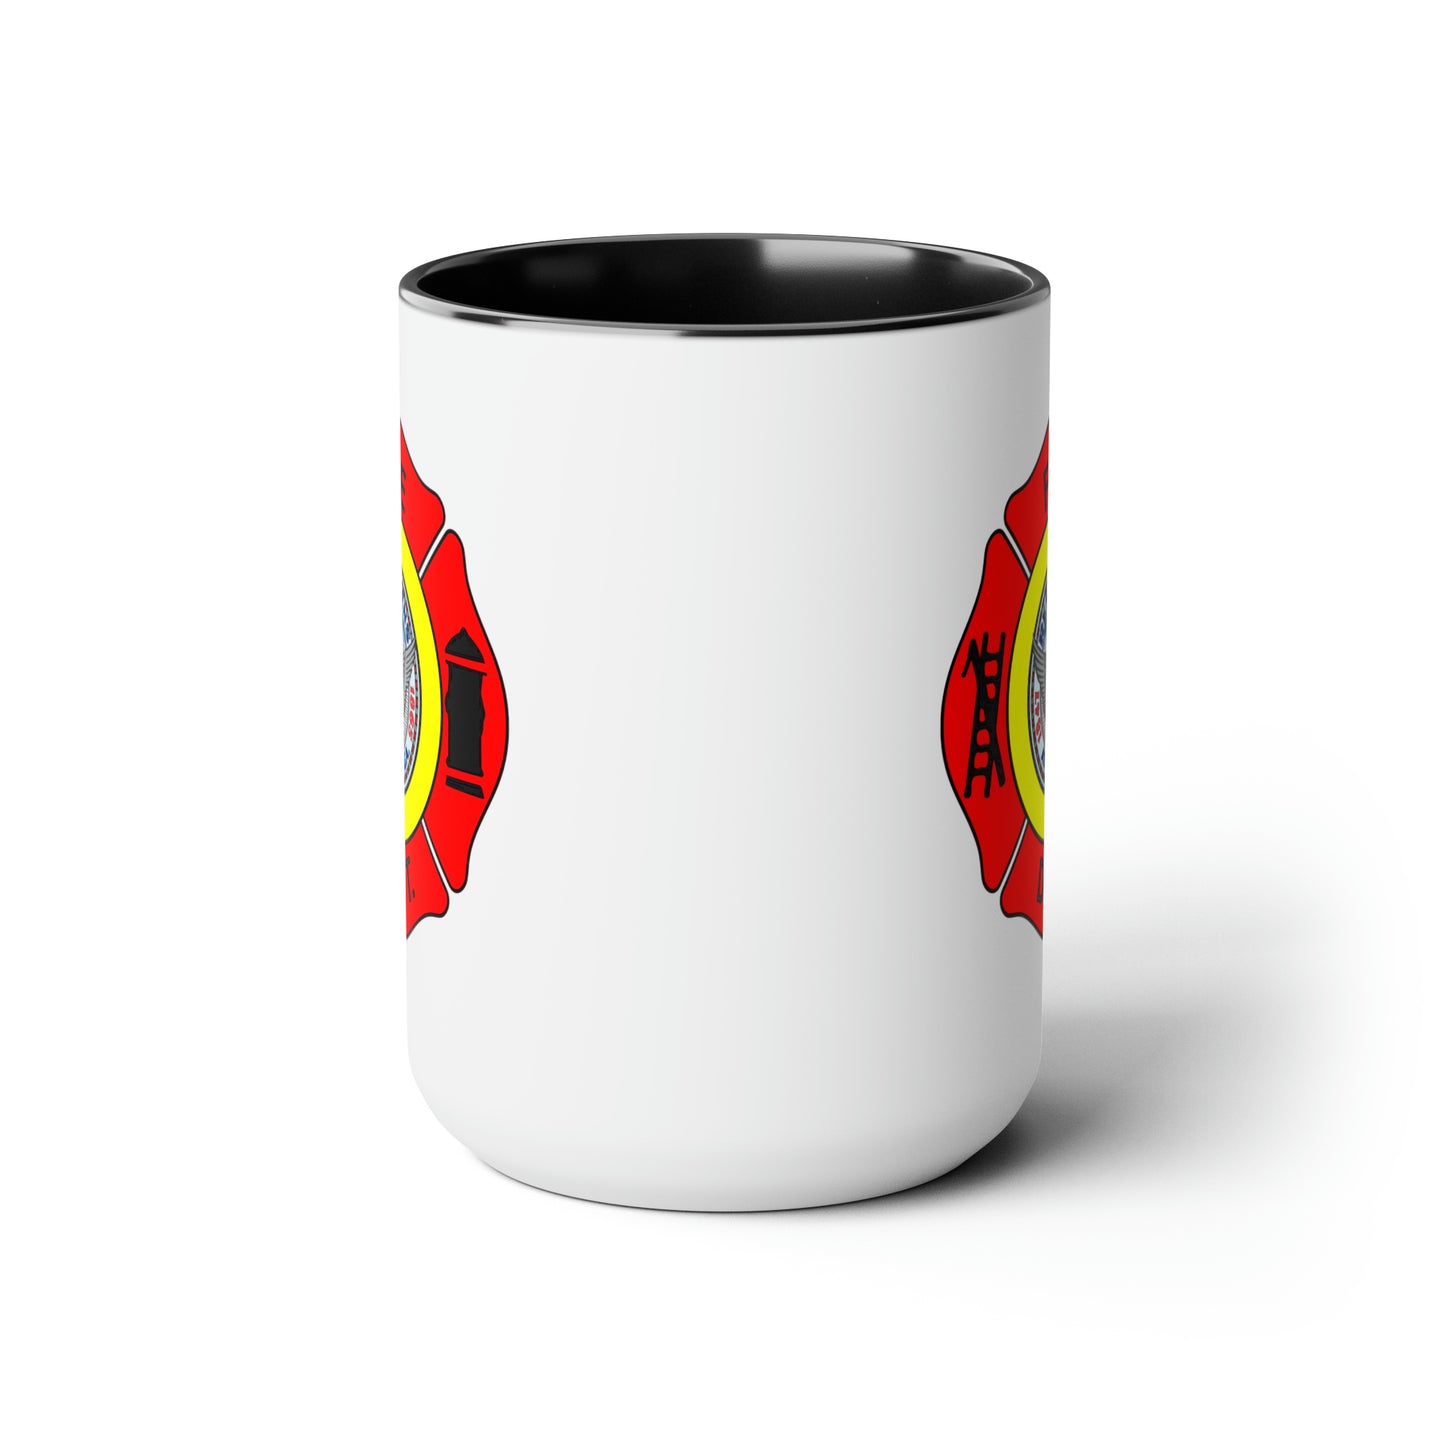 Atlanta Fire Department Coffee Mug - Double Sided Black Accent White Ceramic 15oz by TheGlassyLass